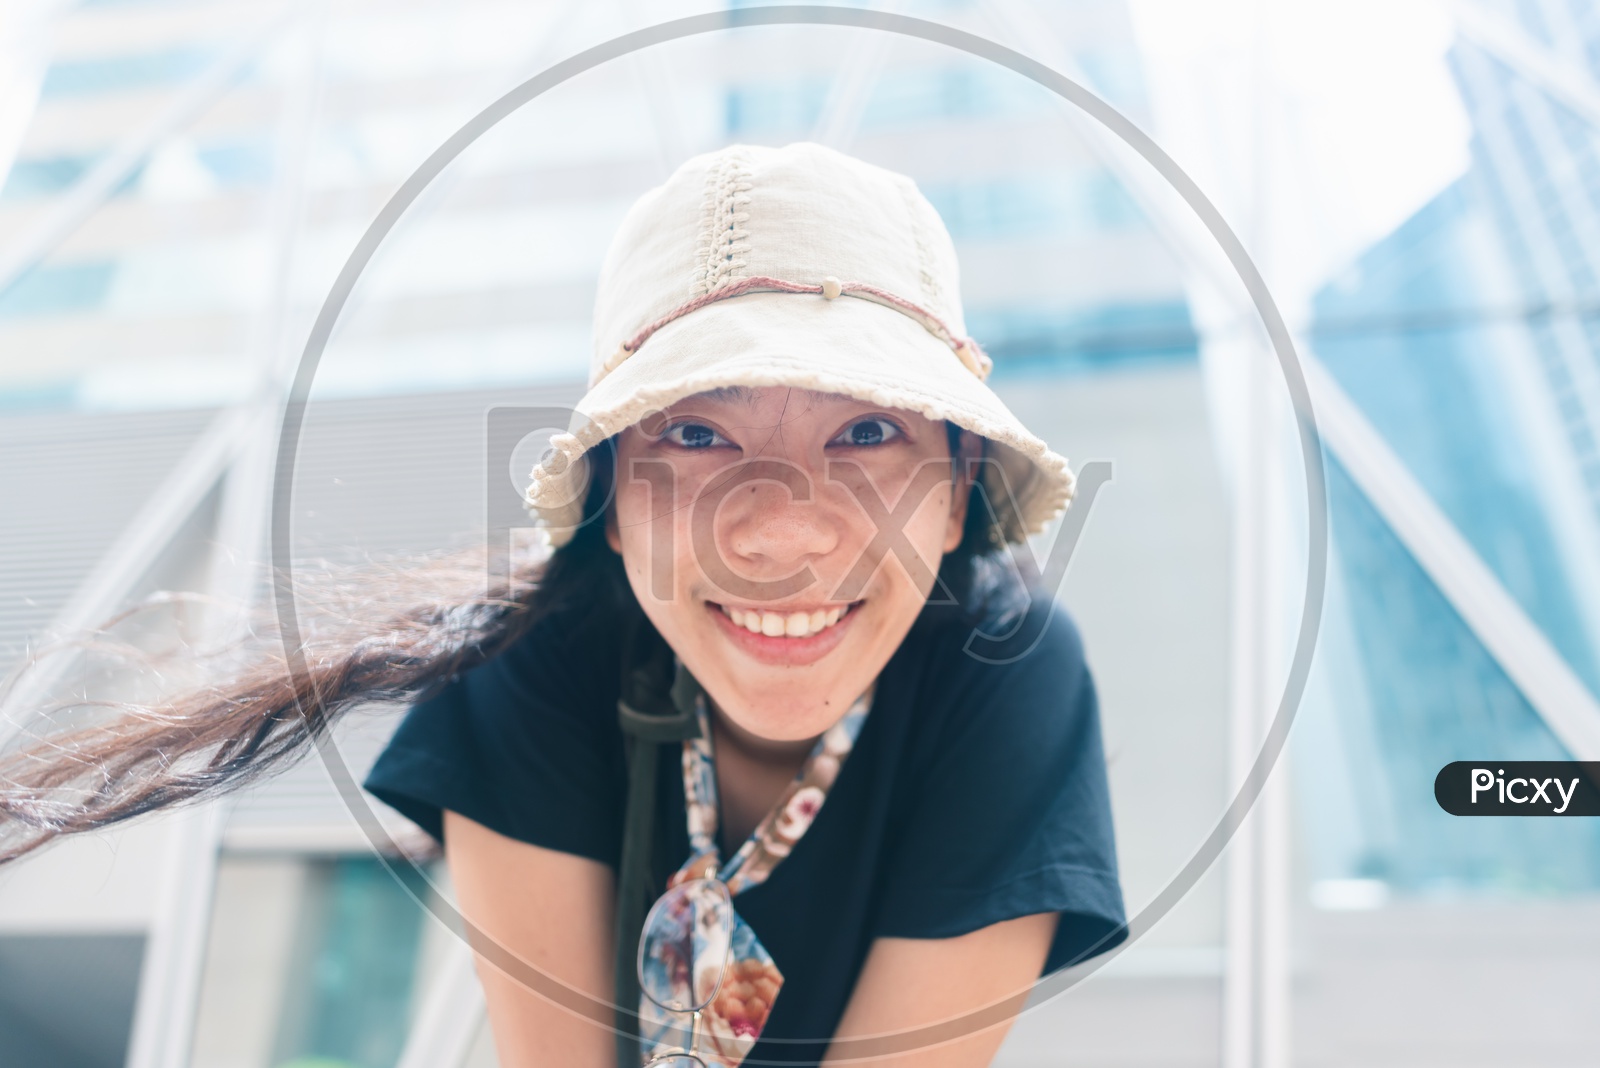 Beautiful young tourist woman smiling wearing a hat